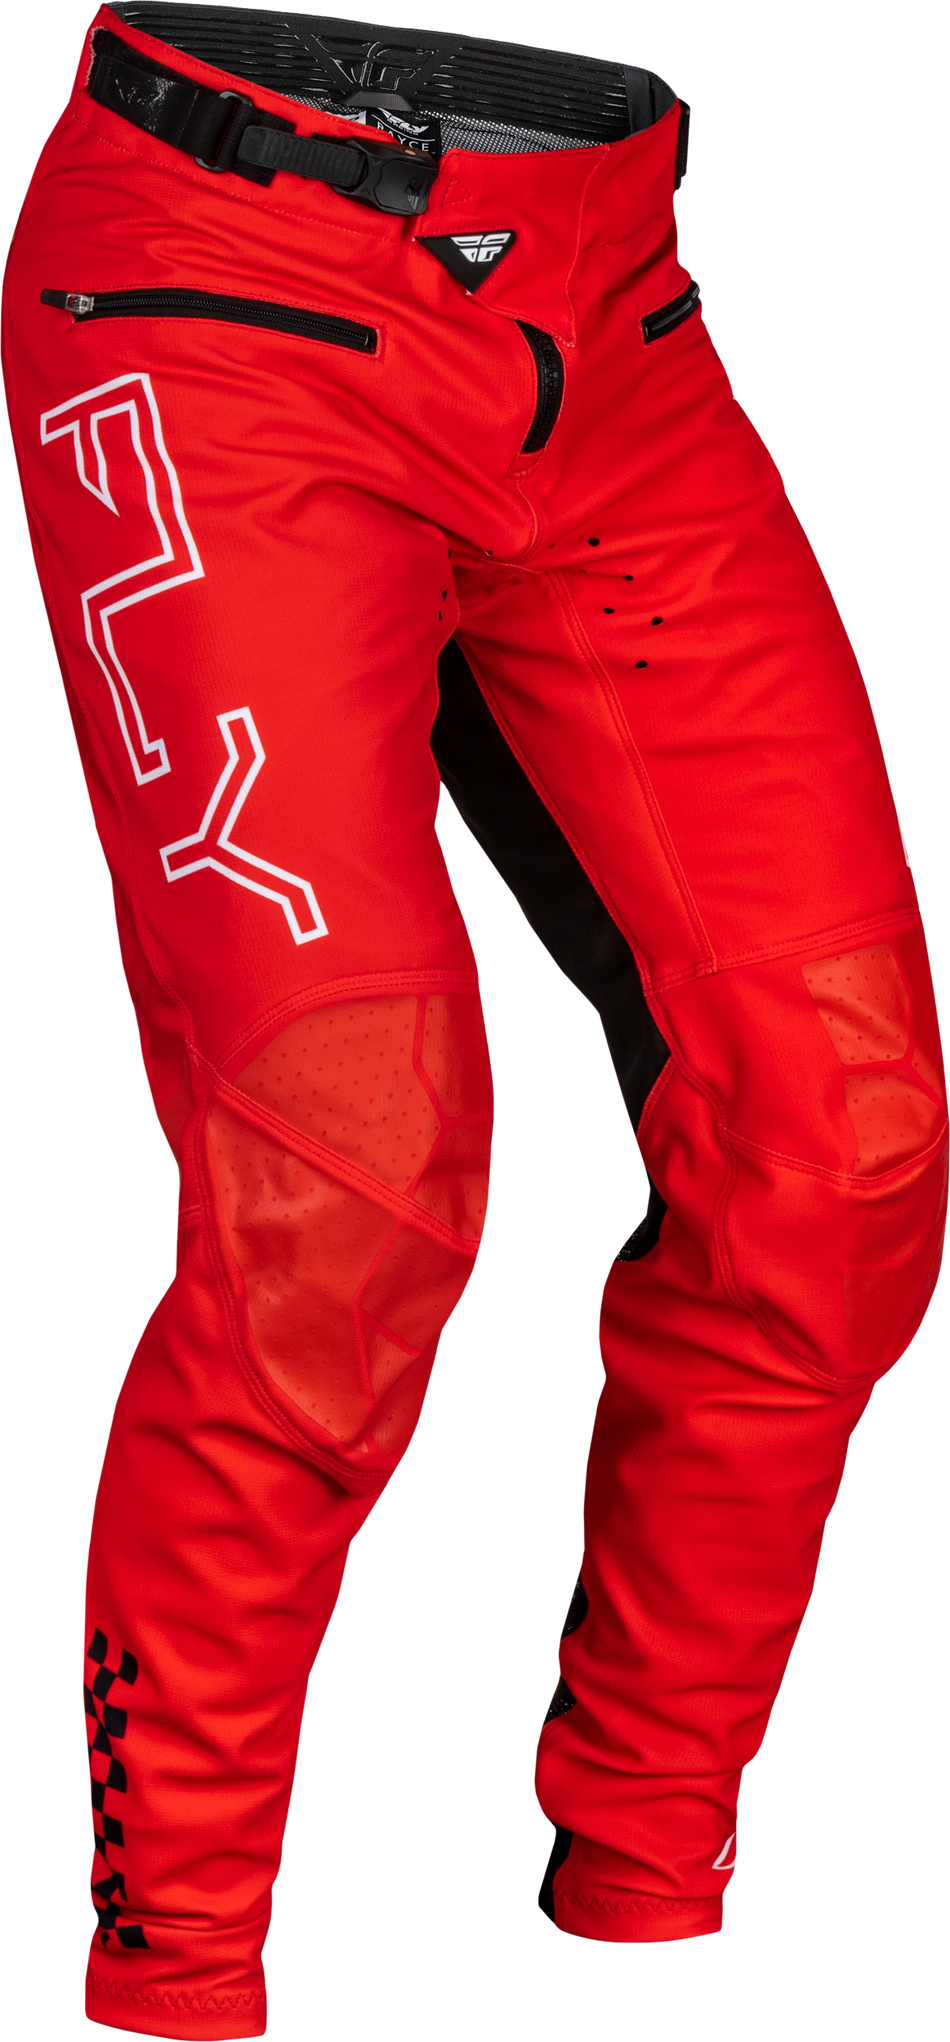 FLY RACING Rayce Bicycle Pants Red Sz 36 377-06336